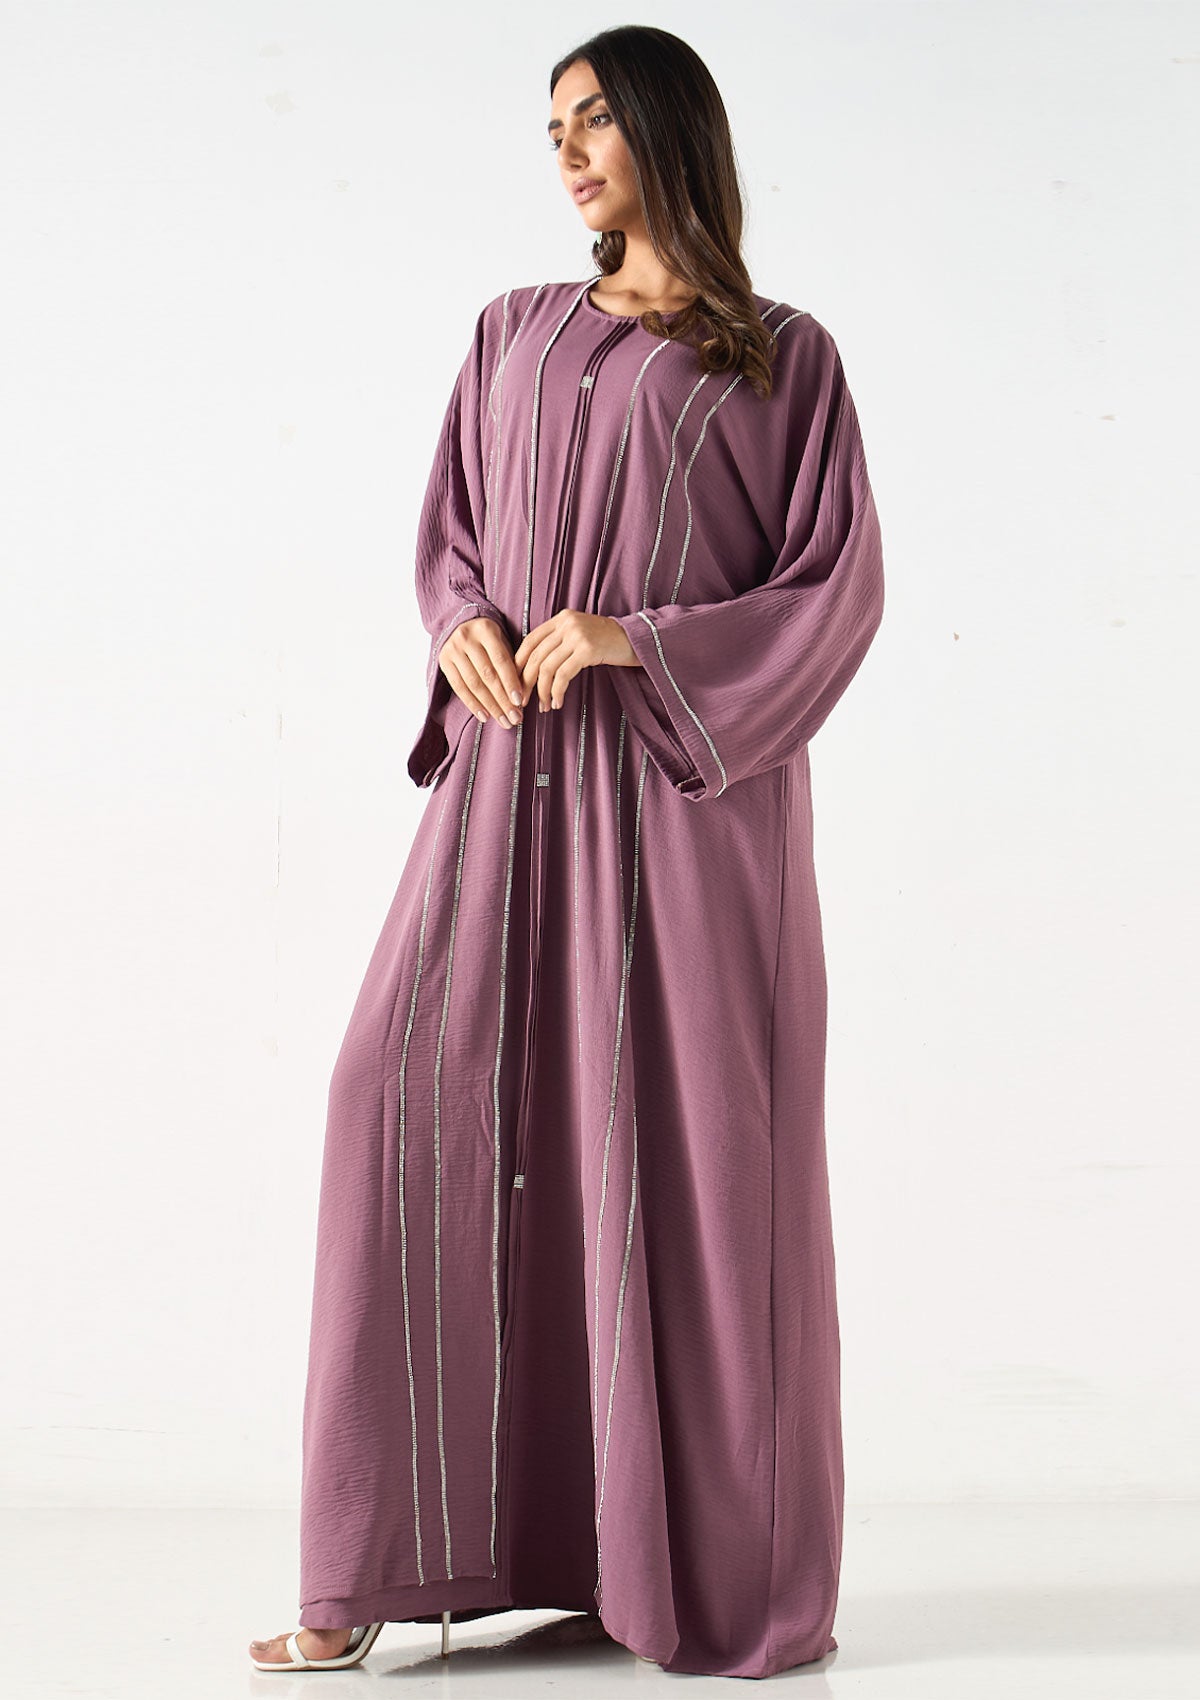 Embellished Abaya with Hijab and Belt